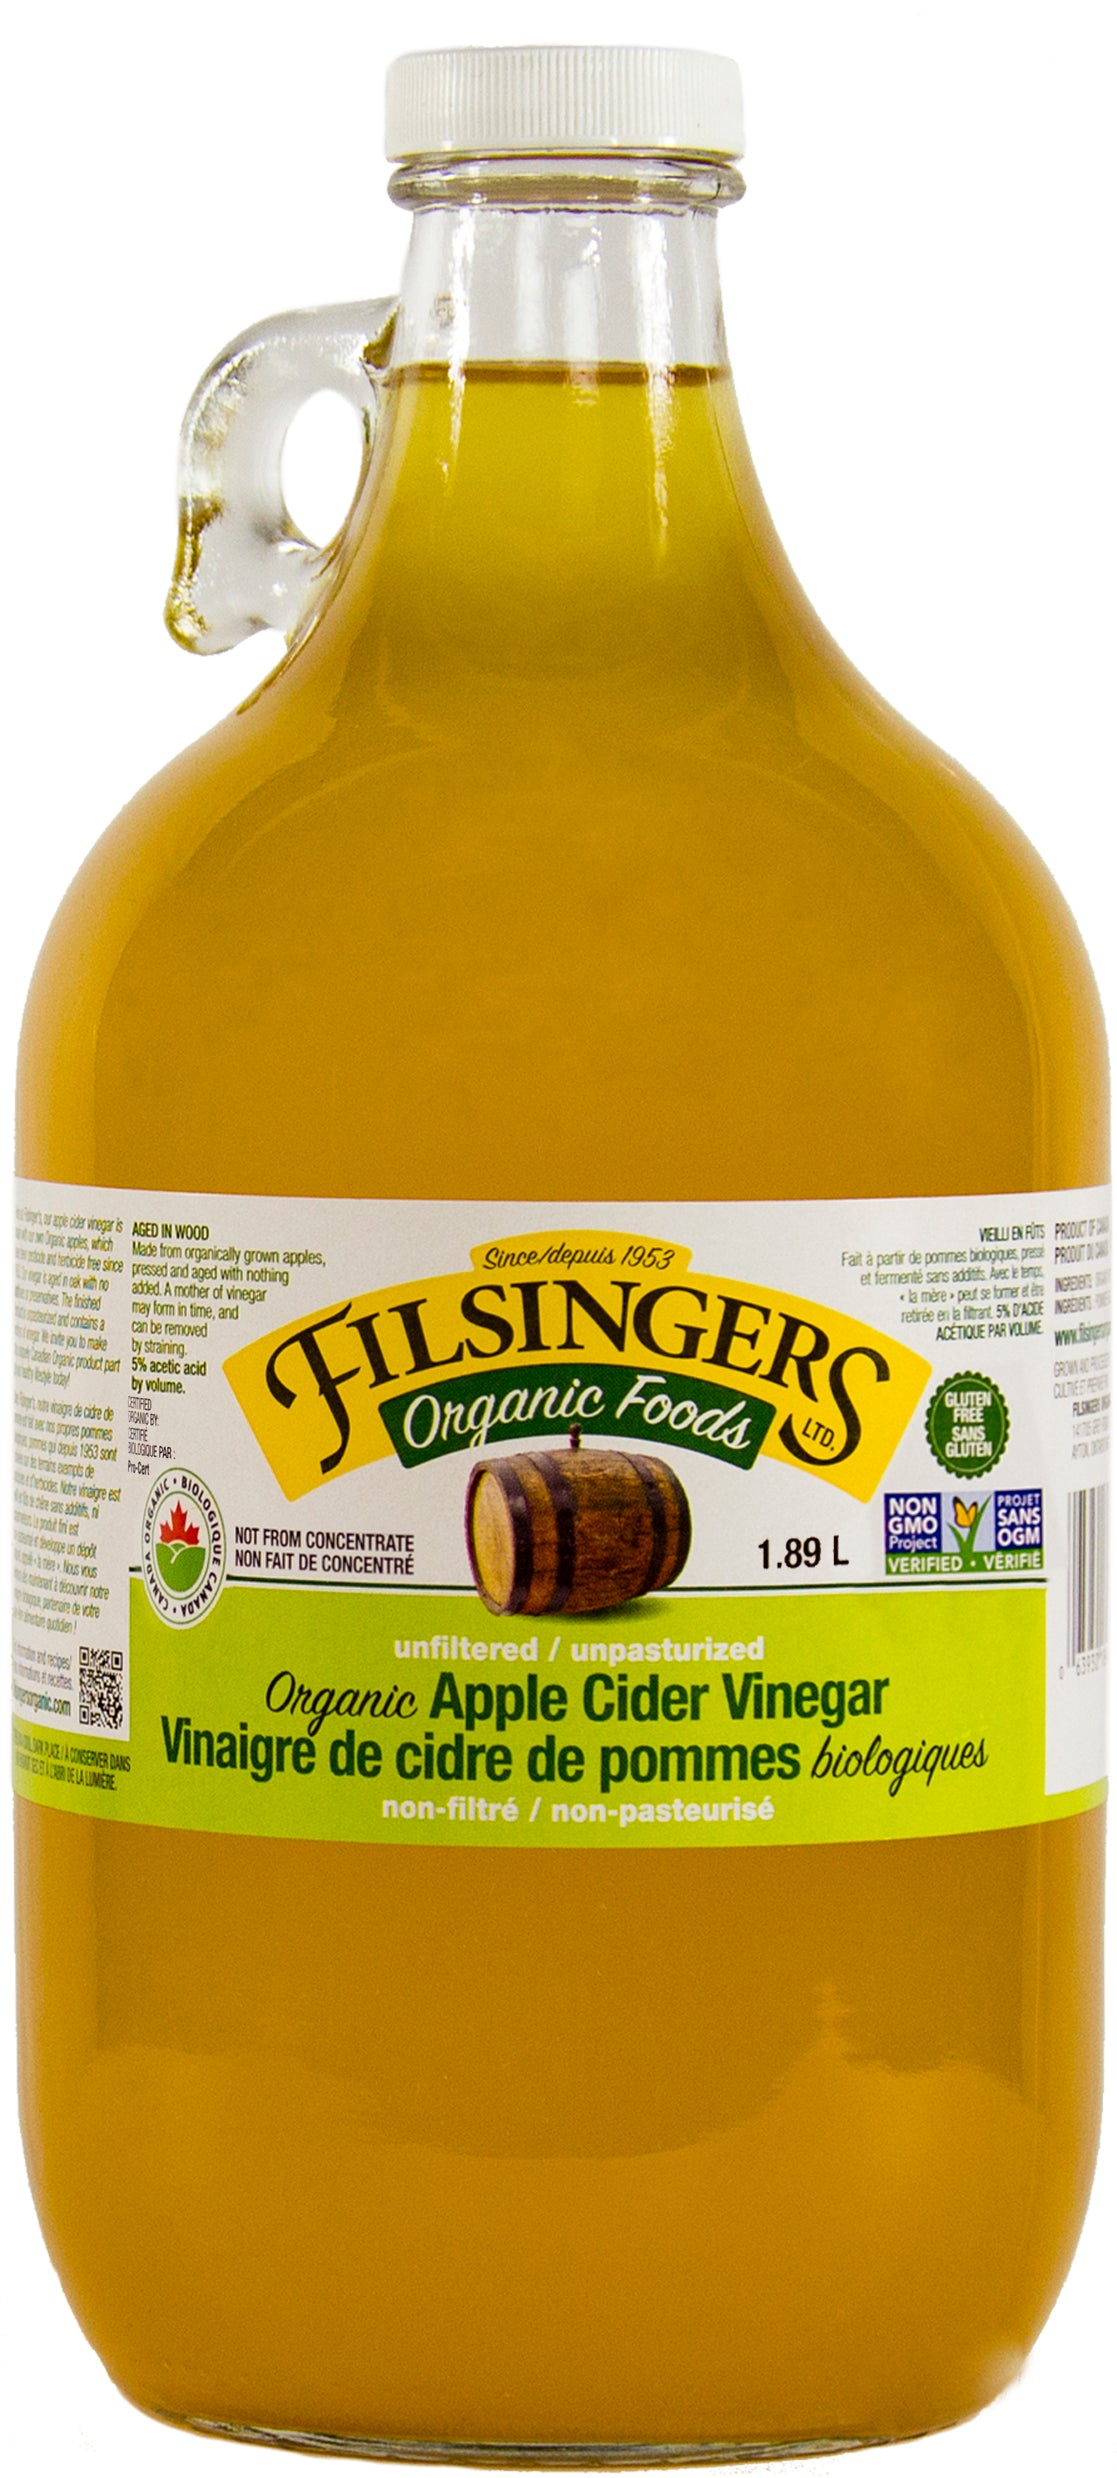 Filsinger's Organic Apple Cider Vinegar (1.89L) - Lifestyle Markets